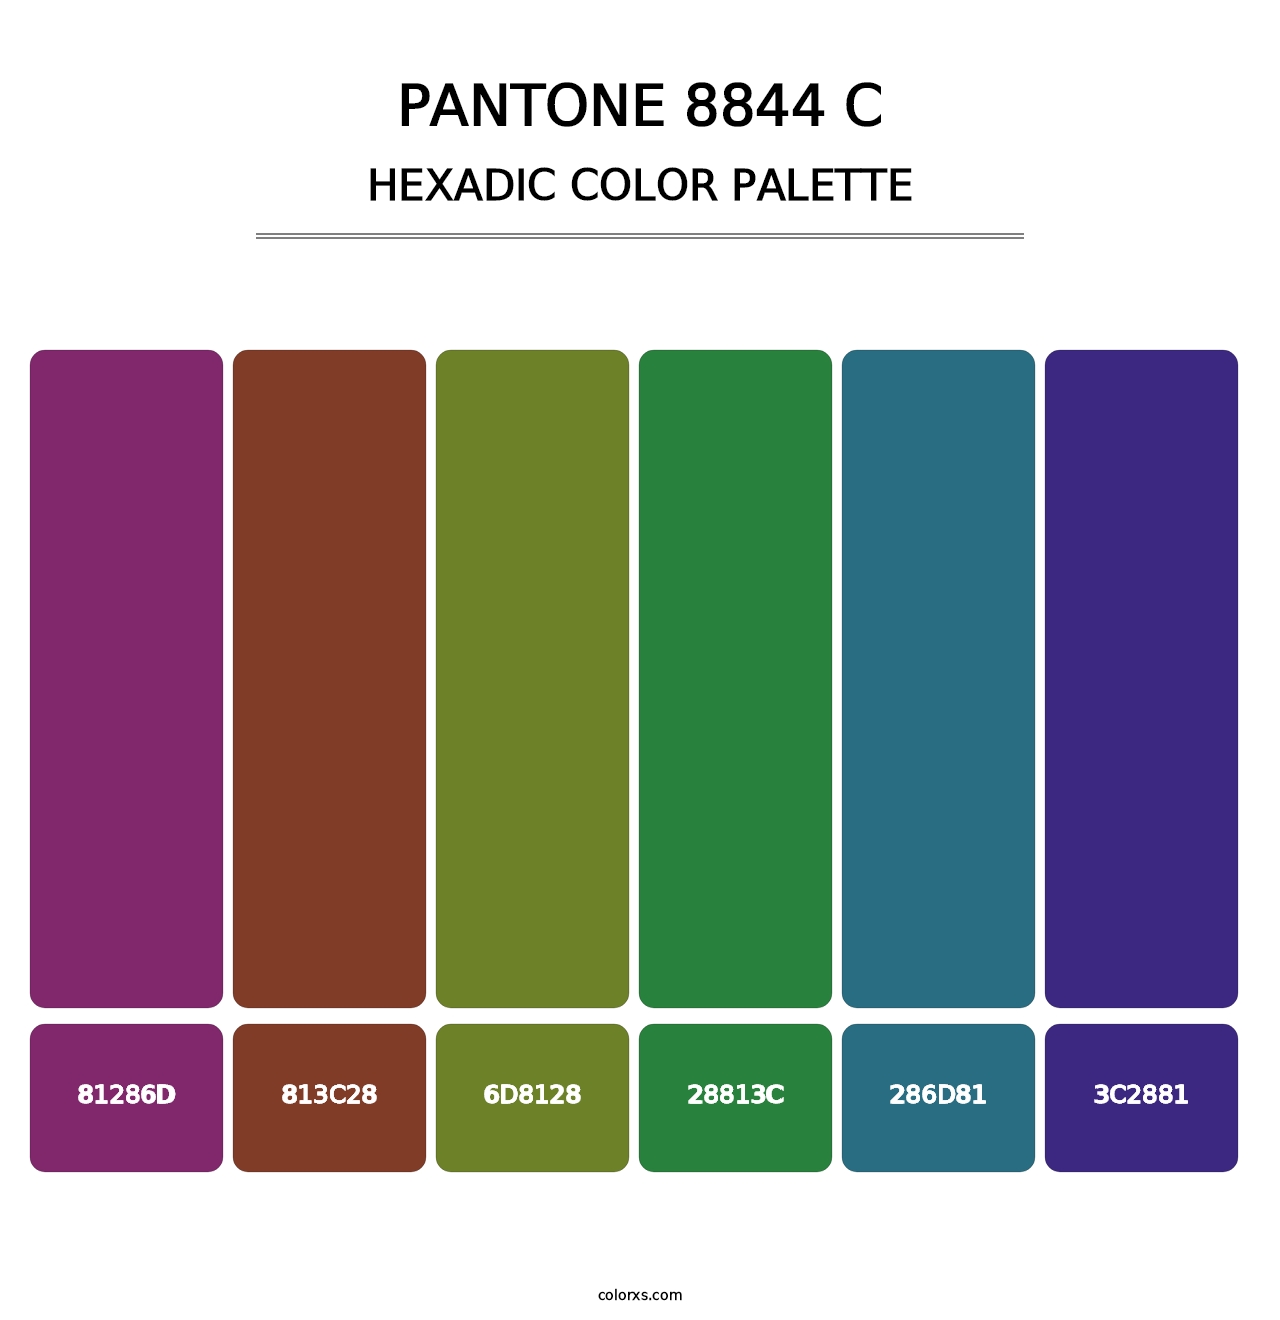 PANTONE 8844 C - Hexadic Color Palette